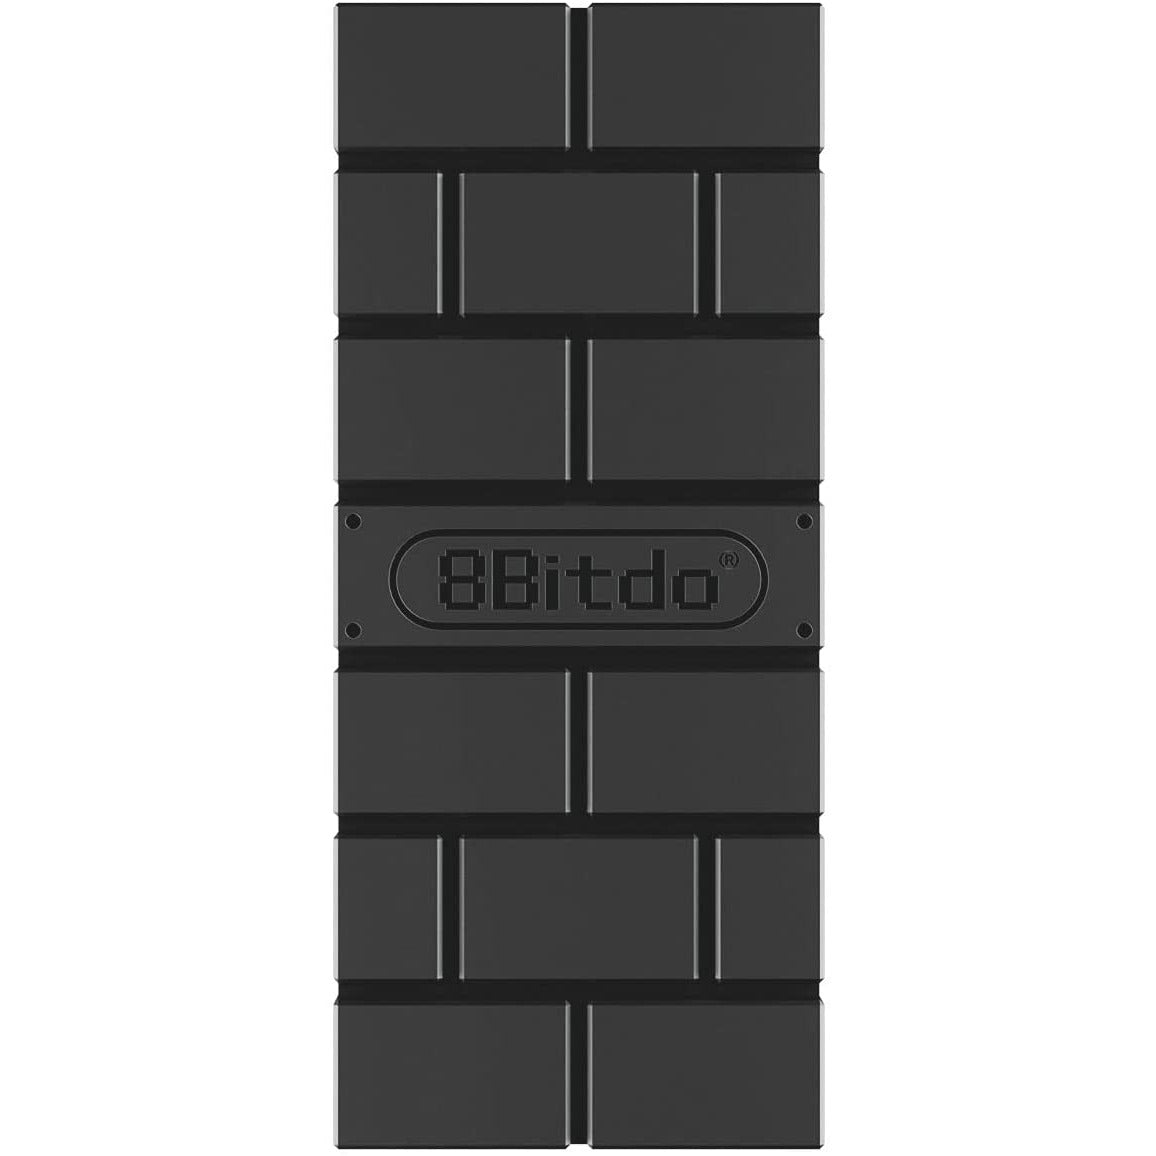 8Bitdo Adapter 2 USB Wireless Switch Controller for Windows, Mac &  Raspberry Pi